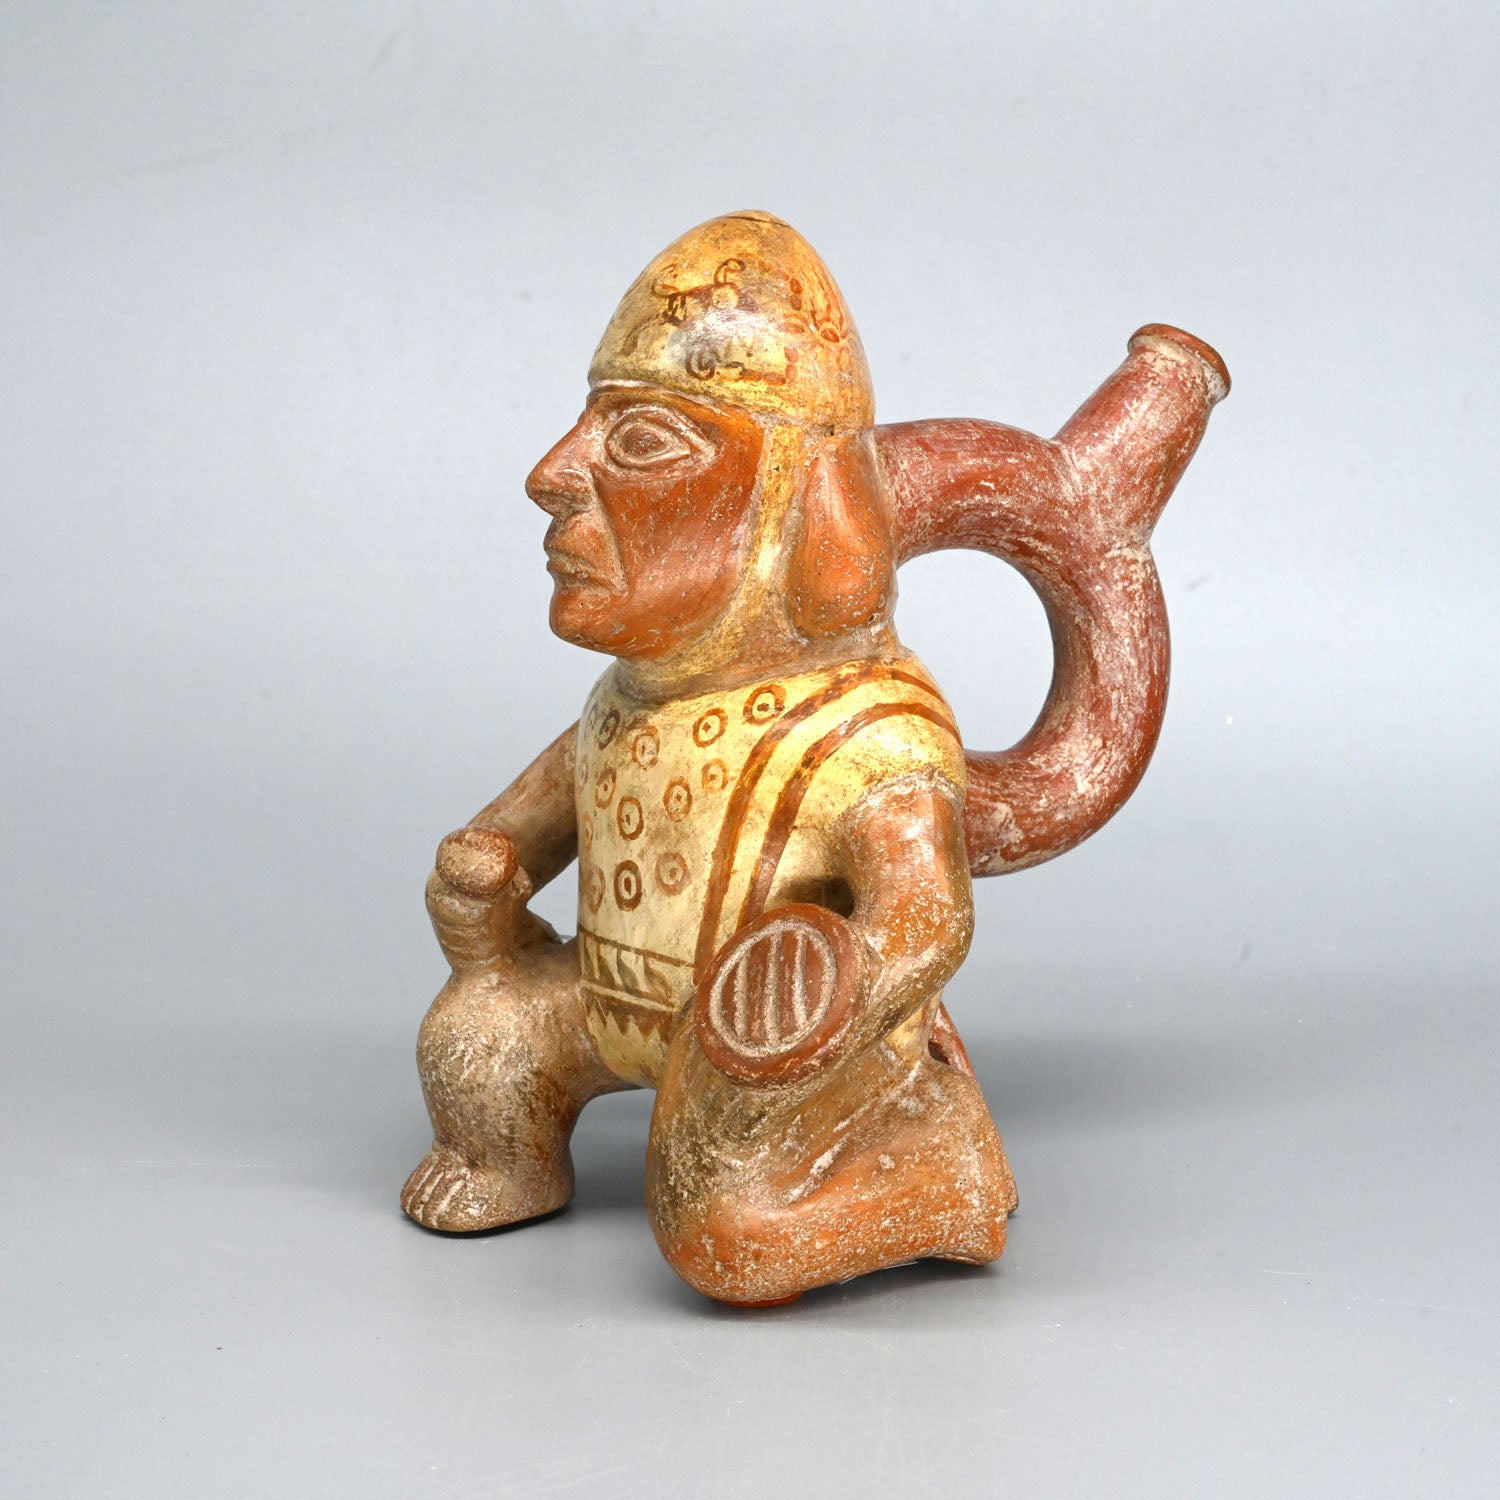 A Moche Kneeling Warrior Stirrup Vessel, Middle Moche Period, ca. 300 - 600 CE